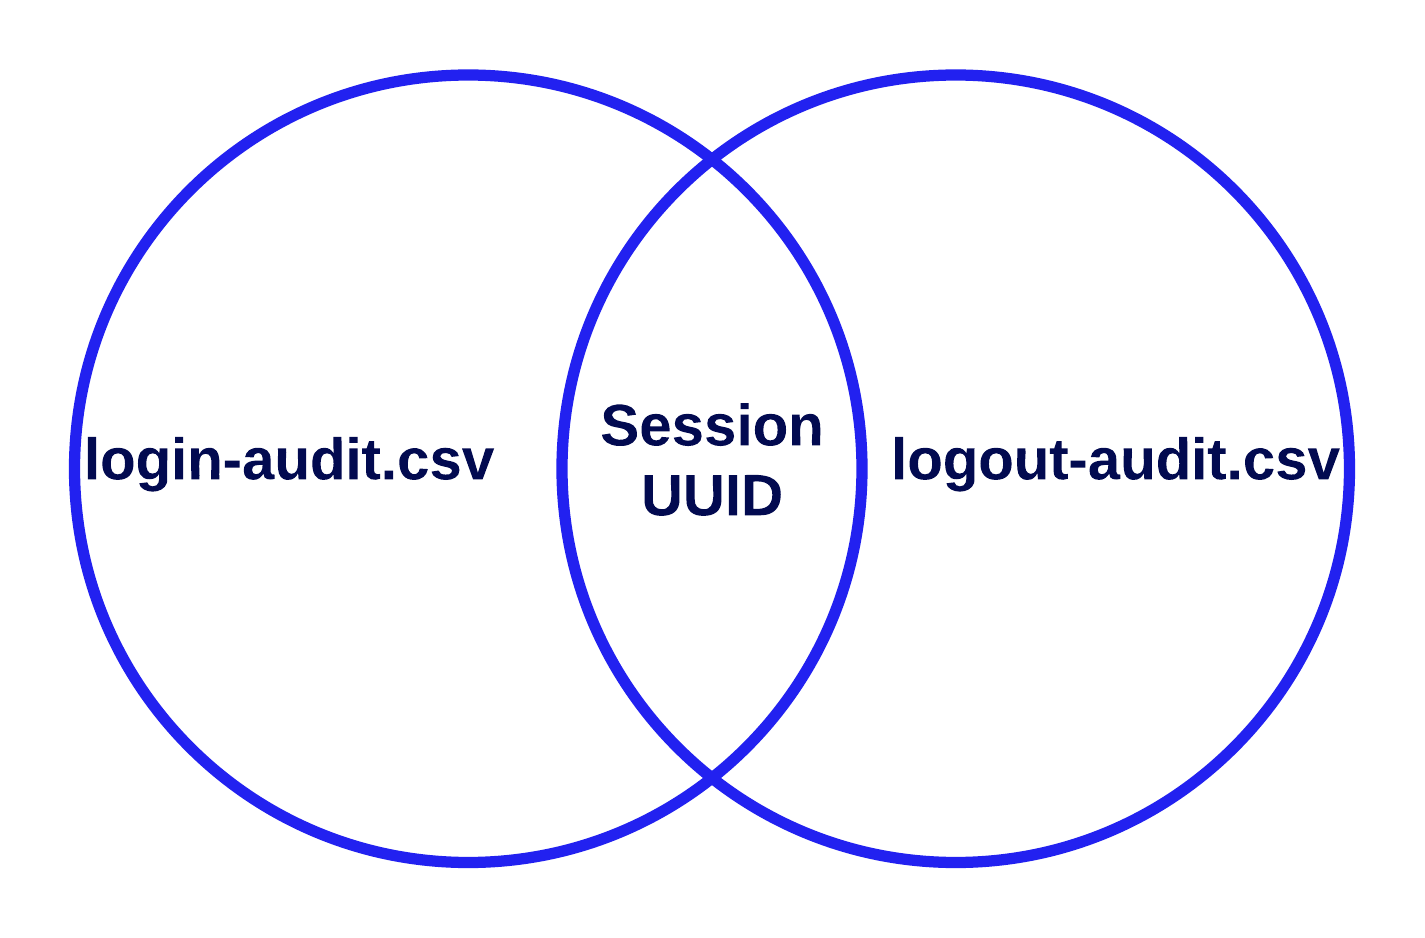 /Combining Login and Logout Audits